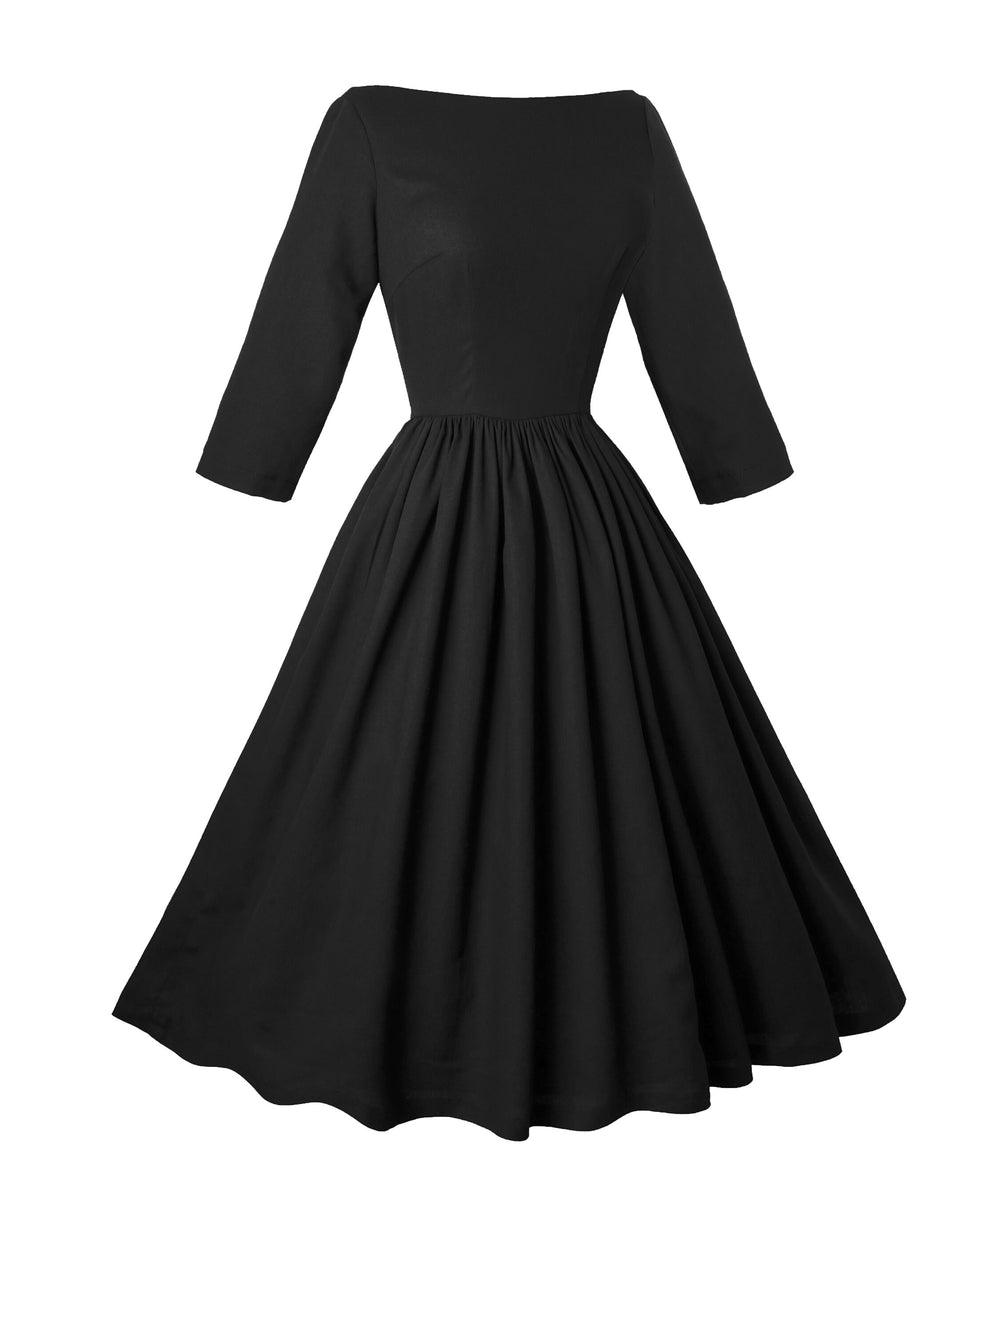 MTO - Ophelia Dress in Midnight Black Linen